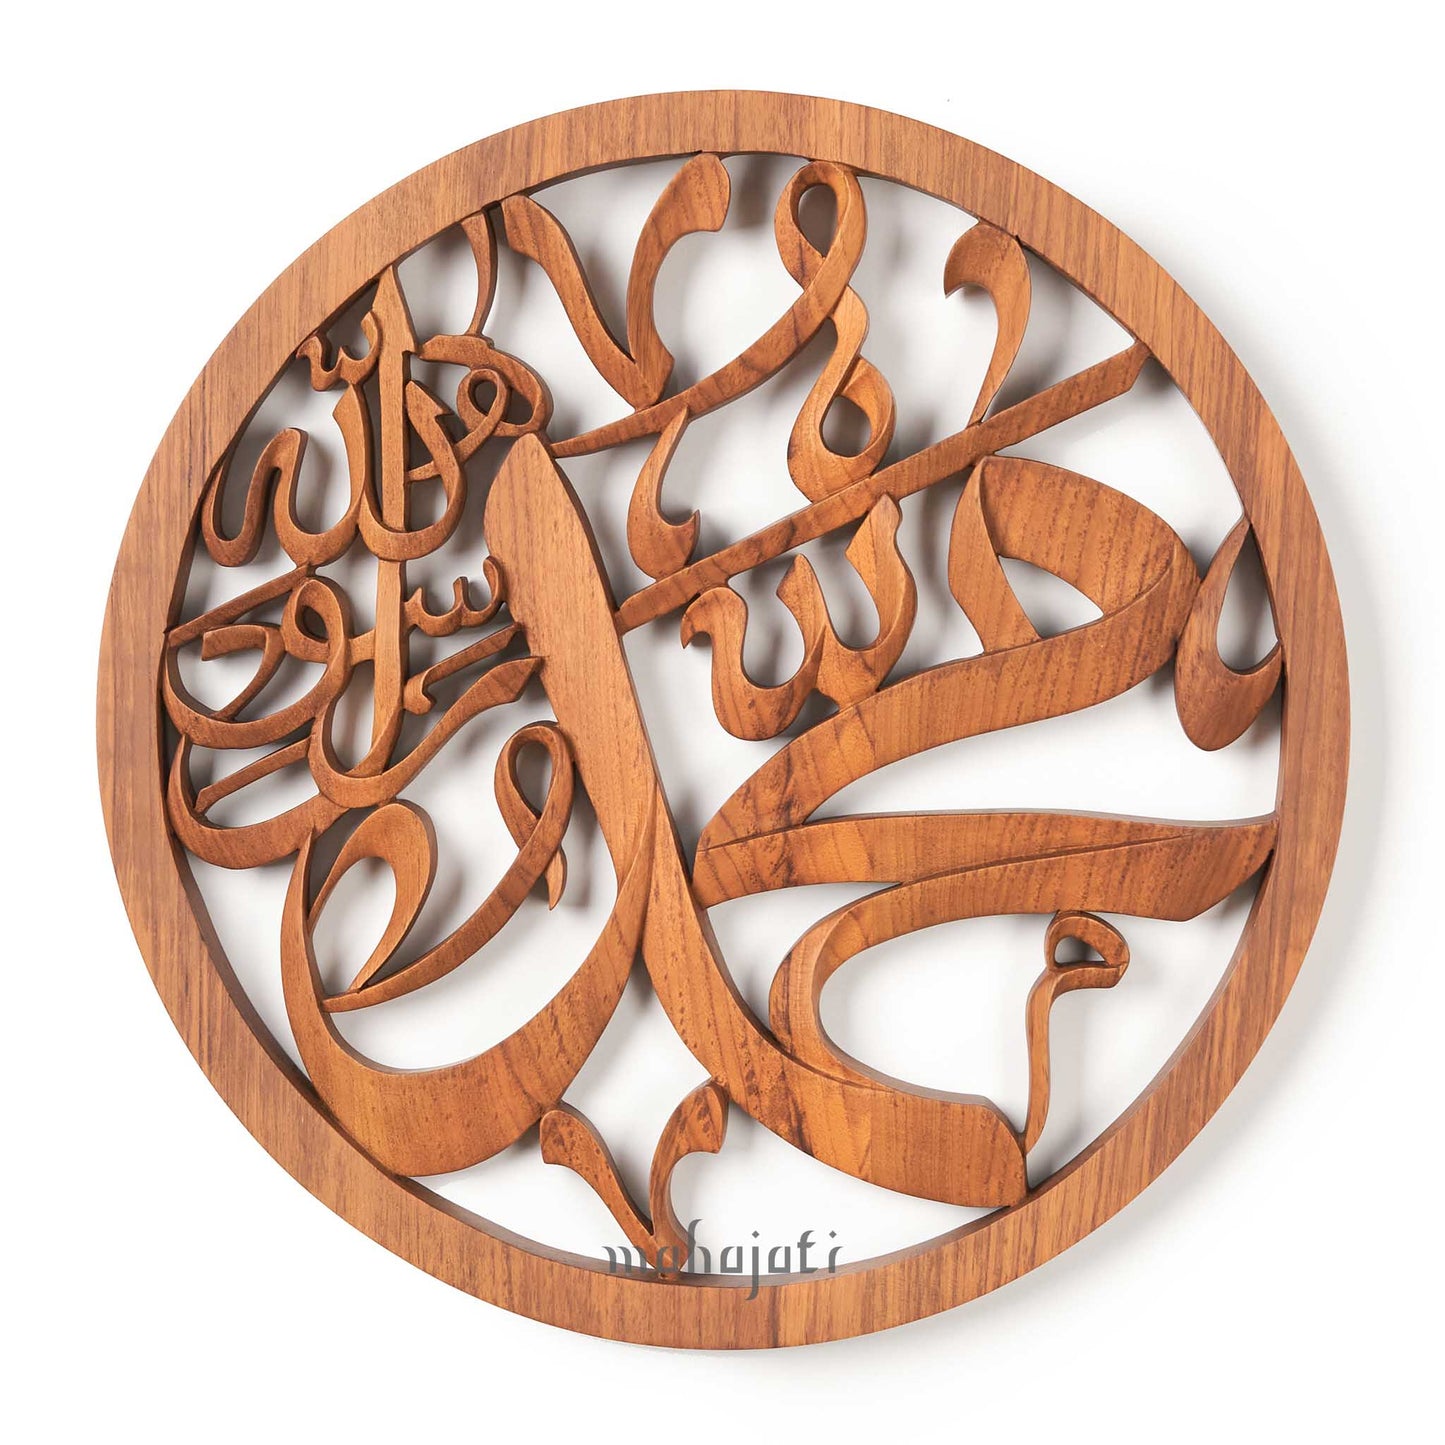 Allah SWT & Muhammad SAW Wall Decor by  Mahajati. Best Islamic Gift Ideas of Wood Carving.